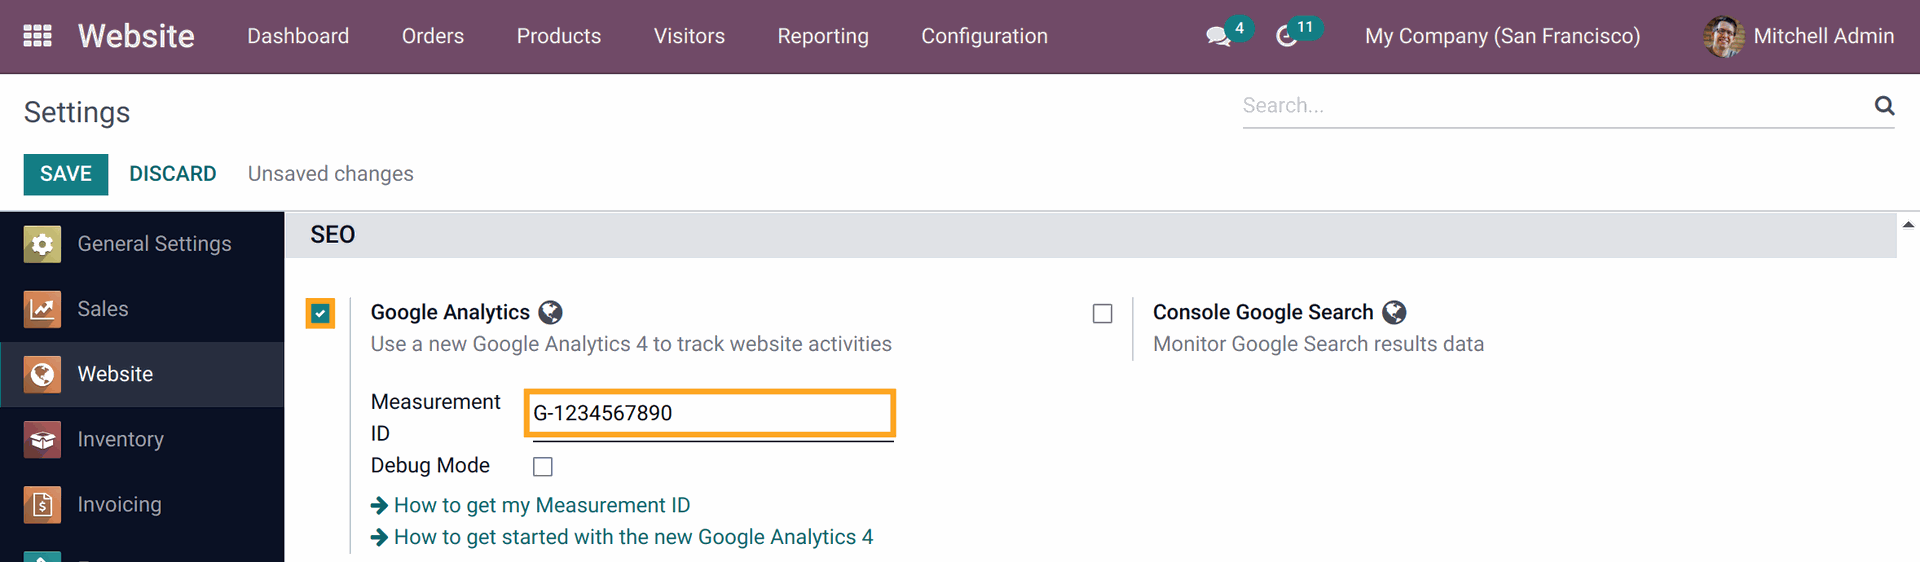 Odoo 15.0 Google Analytics 4 Global Site Tag (gtag.js) configuration